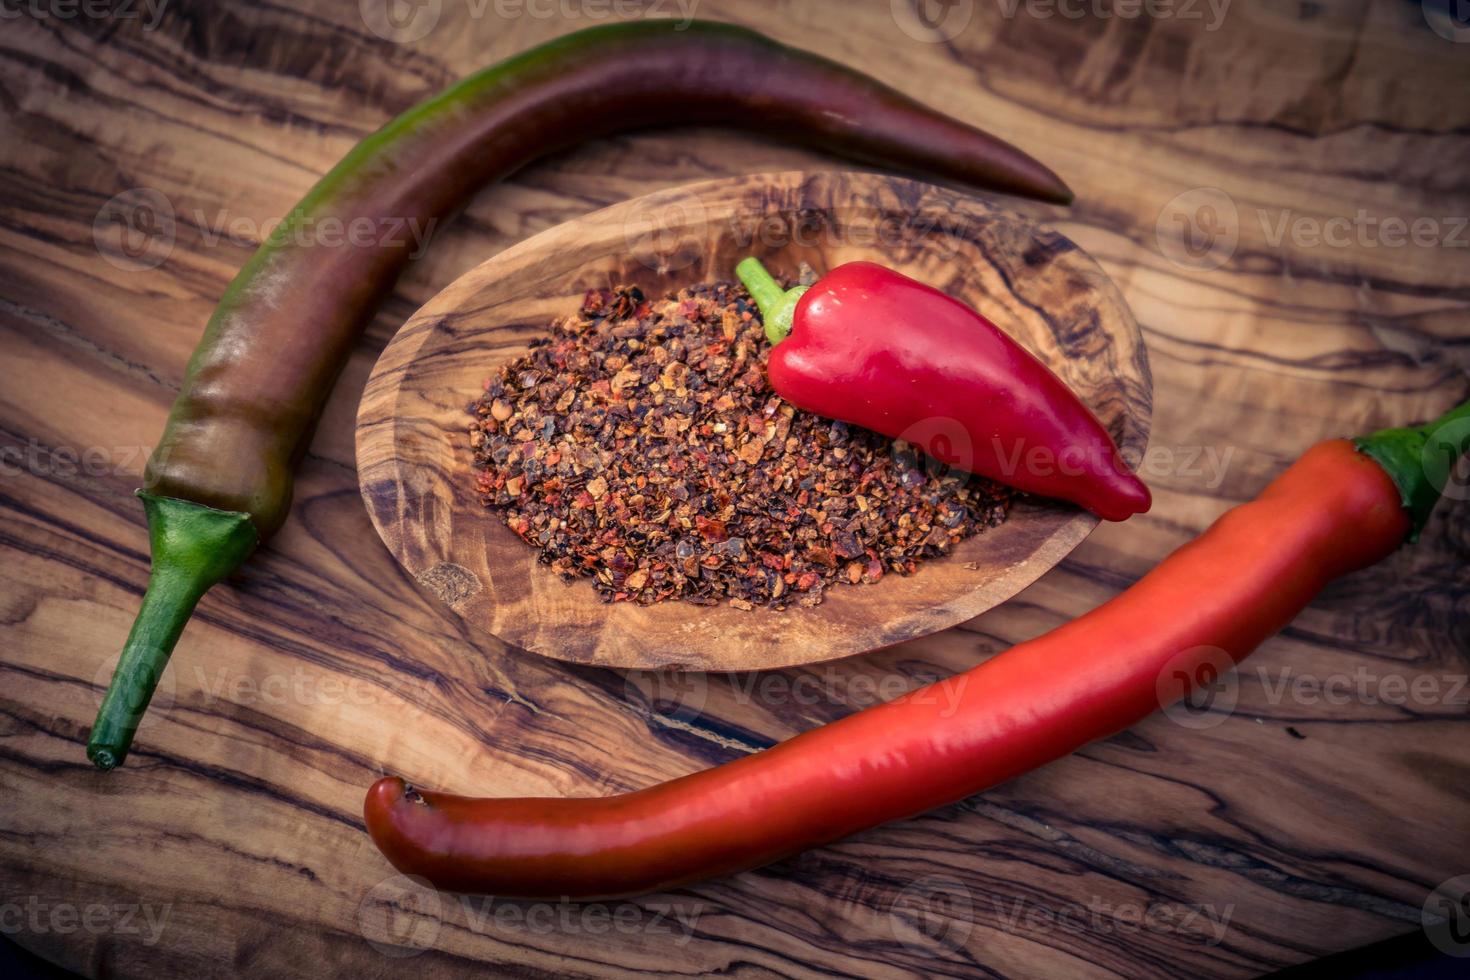 rode chili peper pittige groente foto